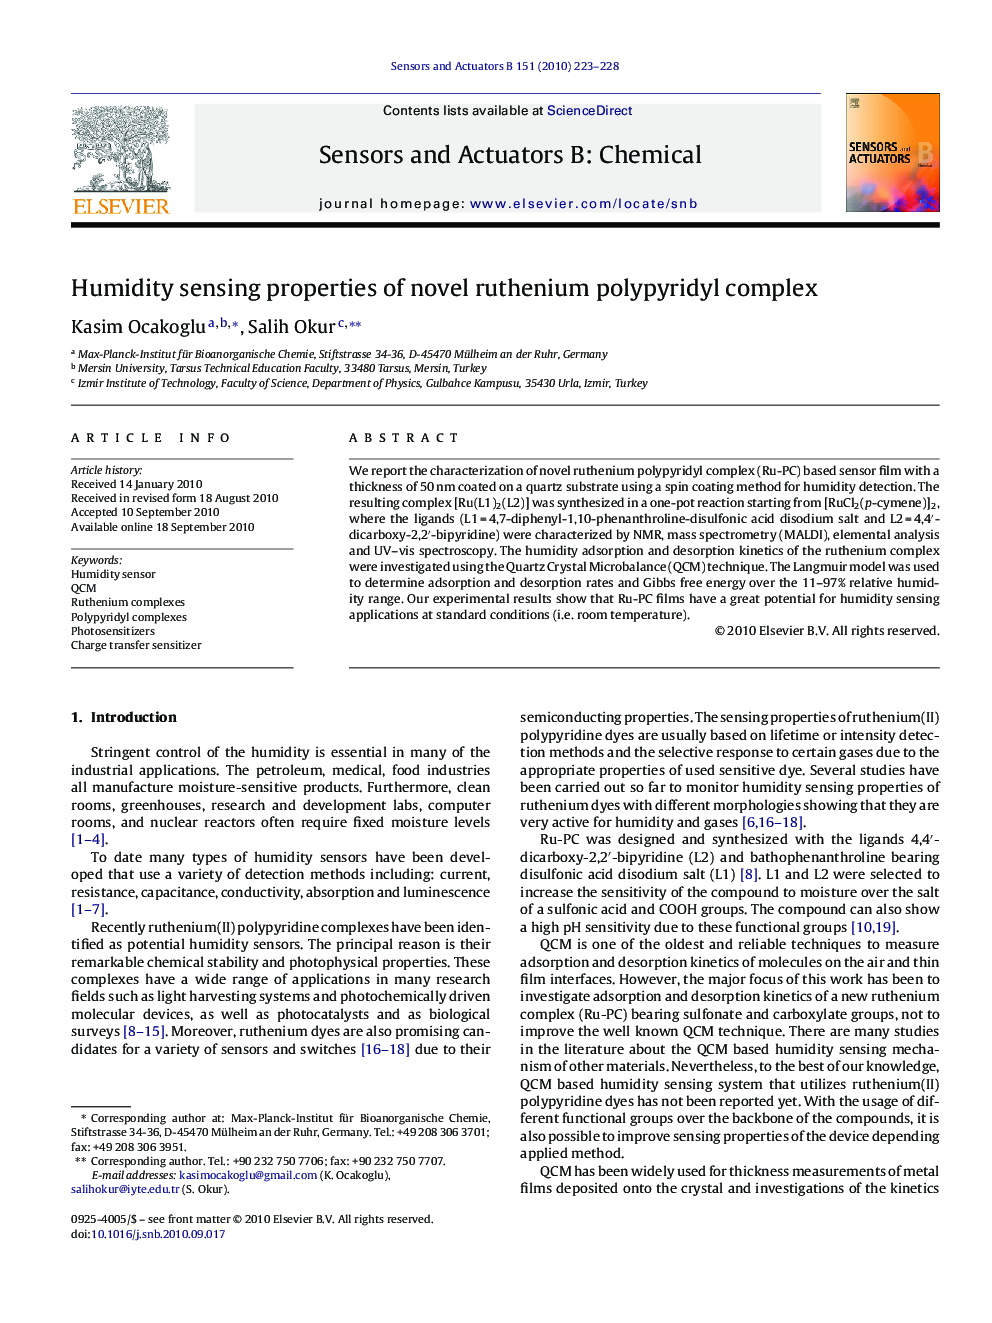 Humidity sensing properties of novel ruthenium polypyridyl complex